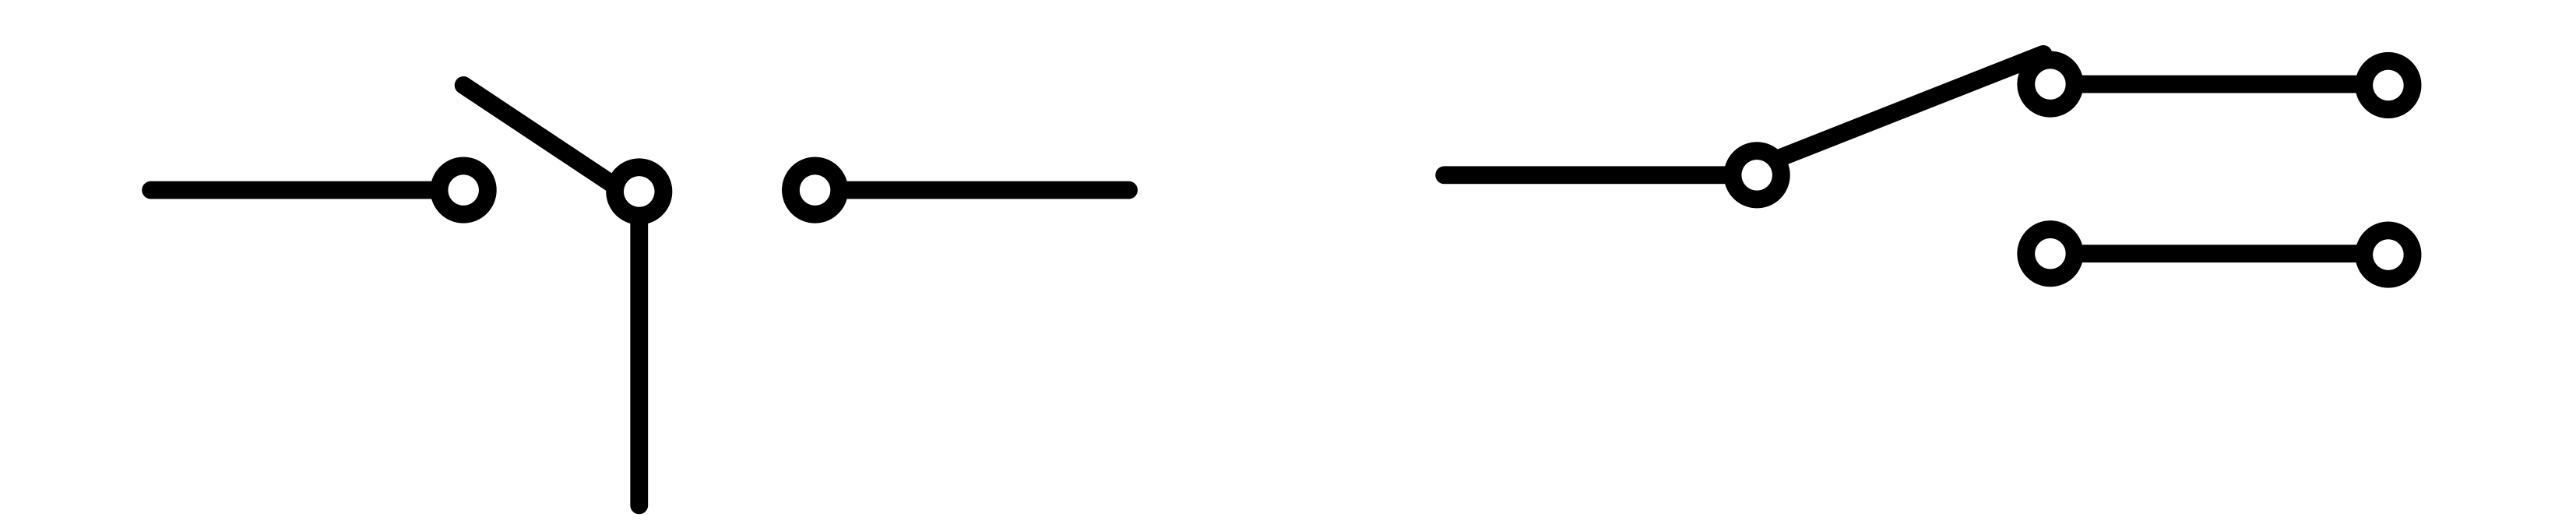 Figure 8: Single Pole Double Throw (SPDT) Switch